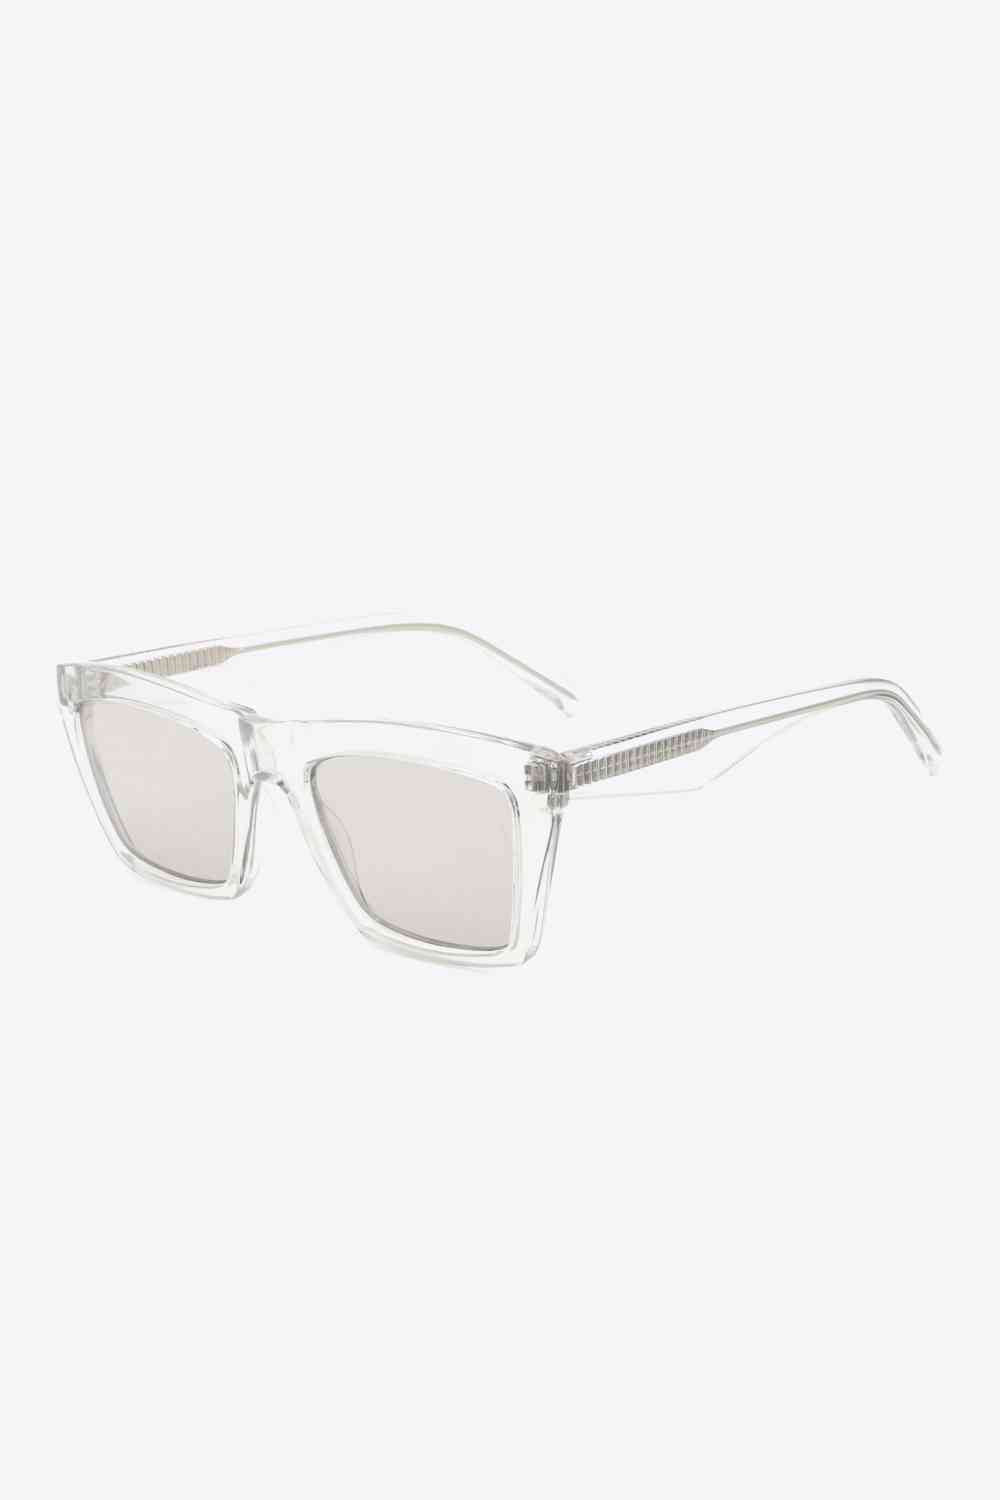 Cellulose Propionate Frame Rectangle Sunglasses Light Gray One Size